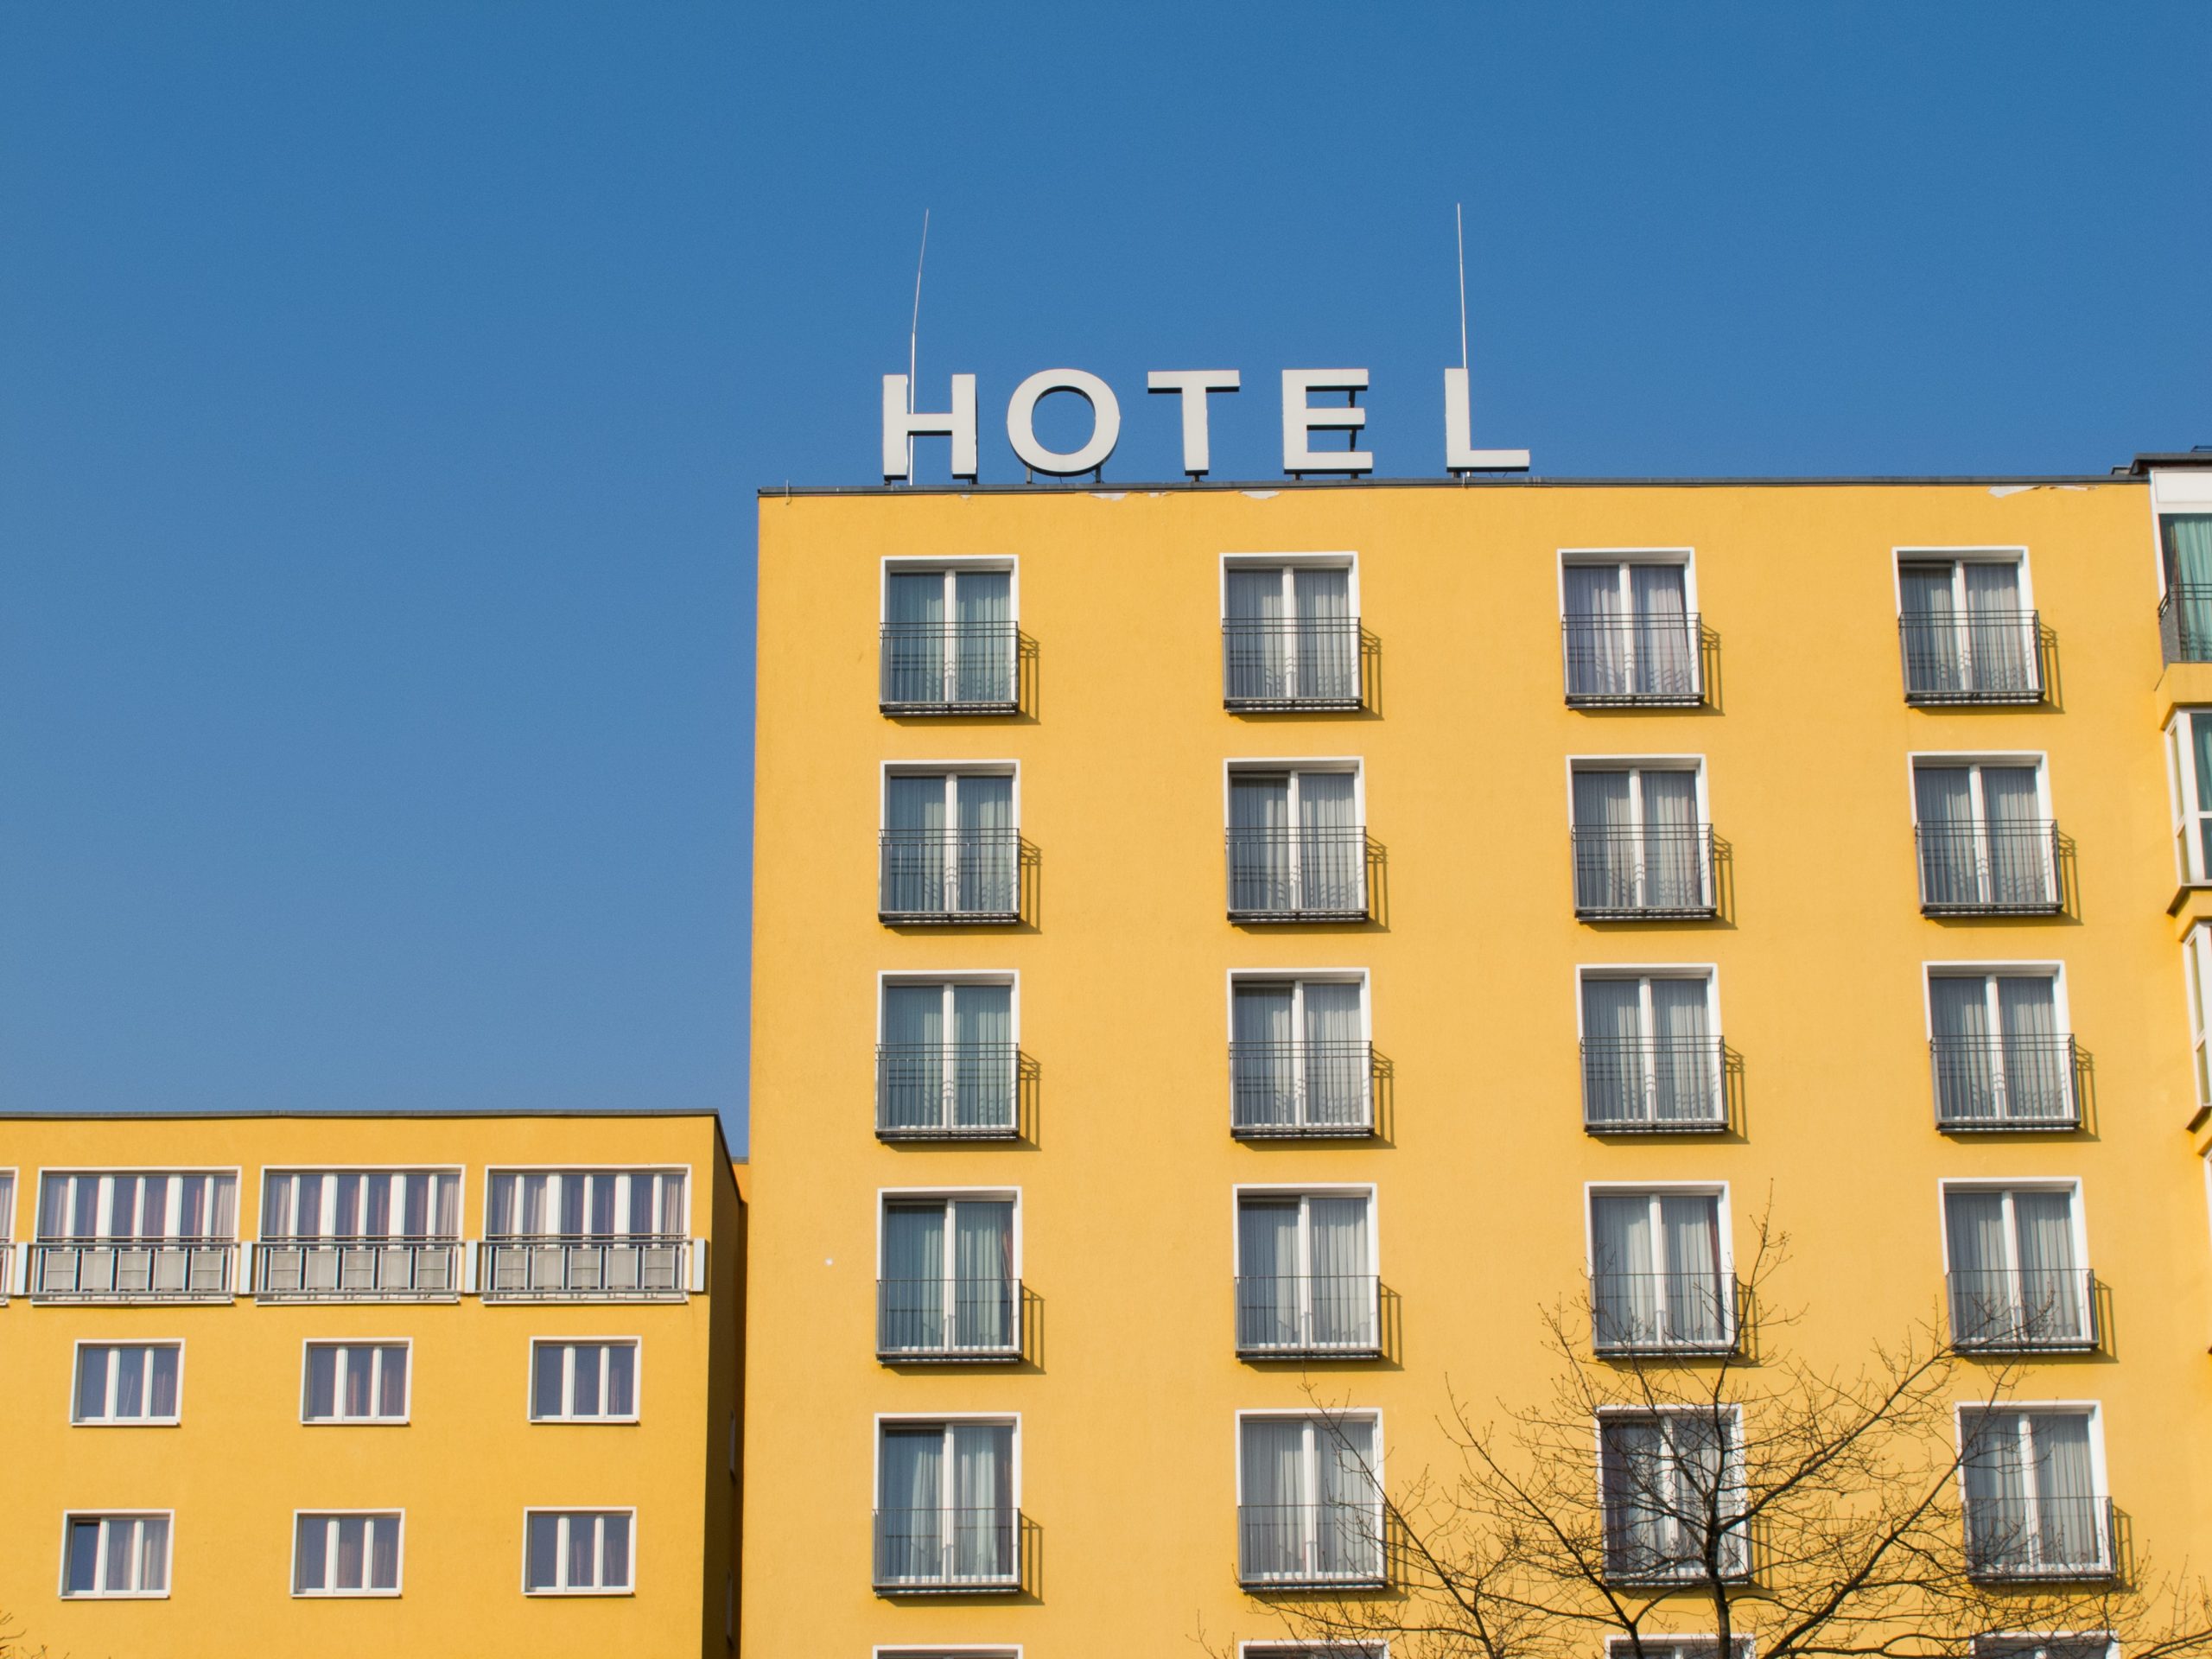 Hotel, sector hotelero